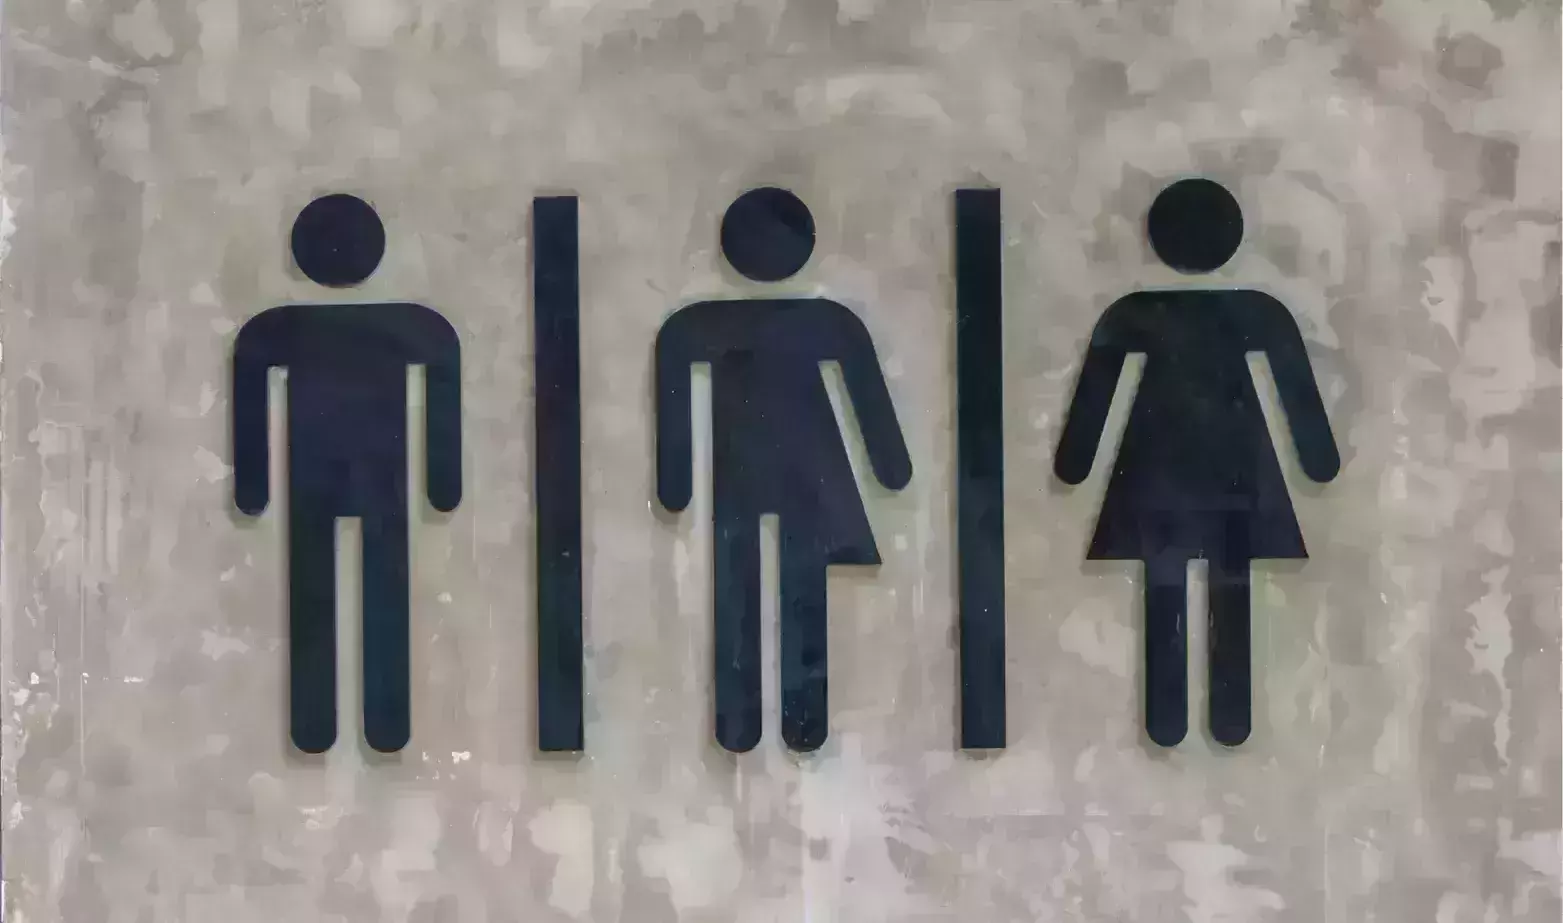 Delhi to build separate public toilets for trans community